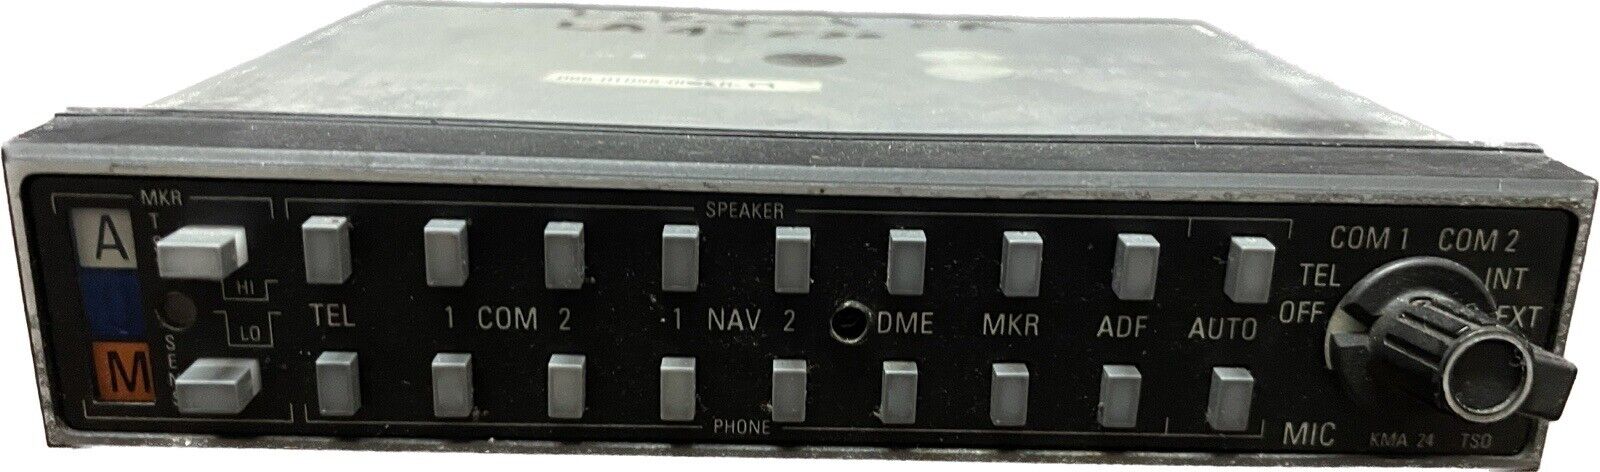 BENDIX KING KMA 24 PN 066-1055-03 Receiver & Isolation Amplifier